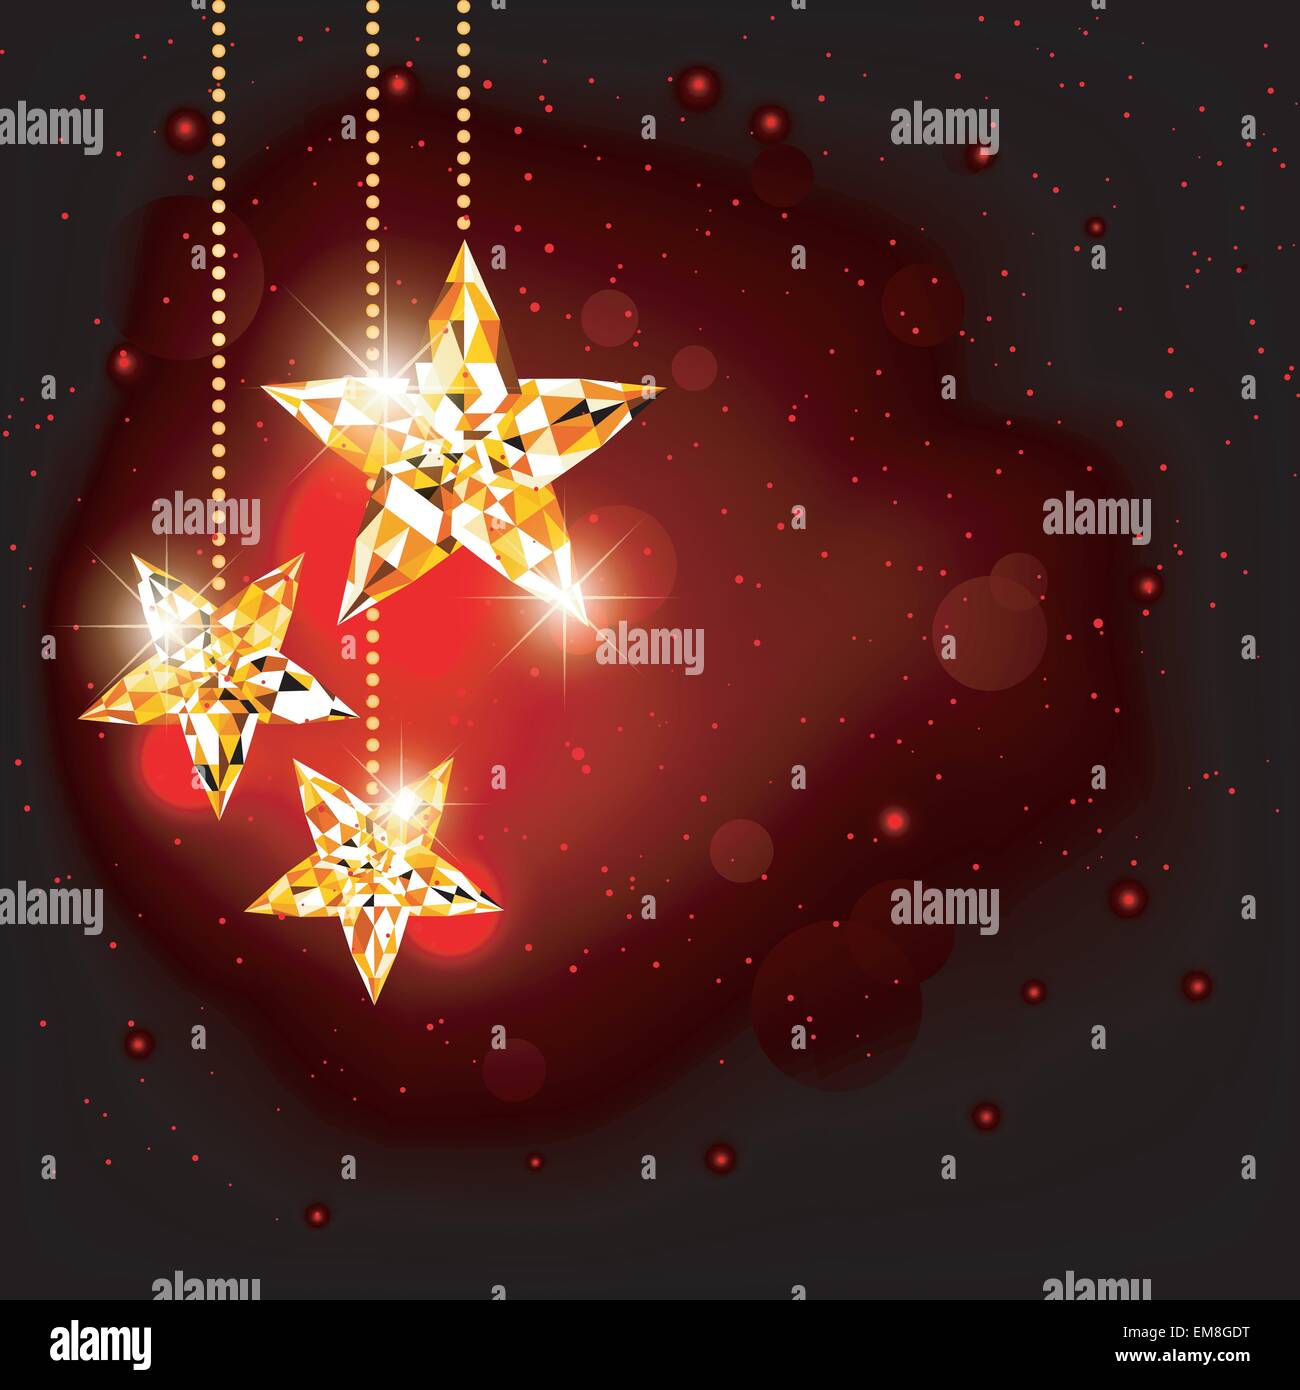 Polygone Noël Star Background Illustration de Vecteur